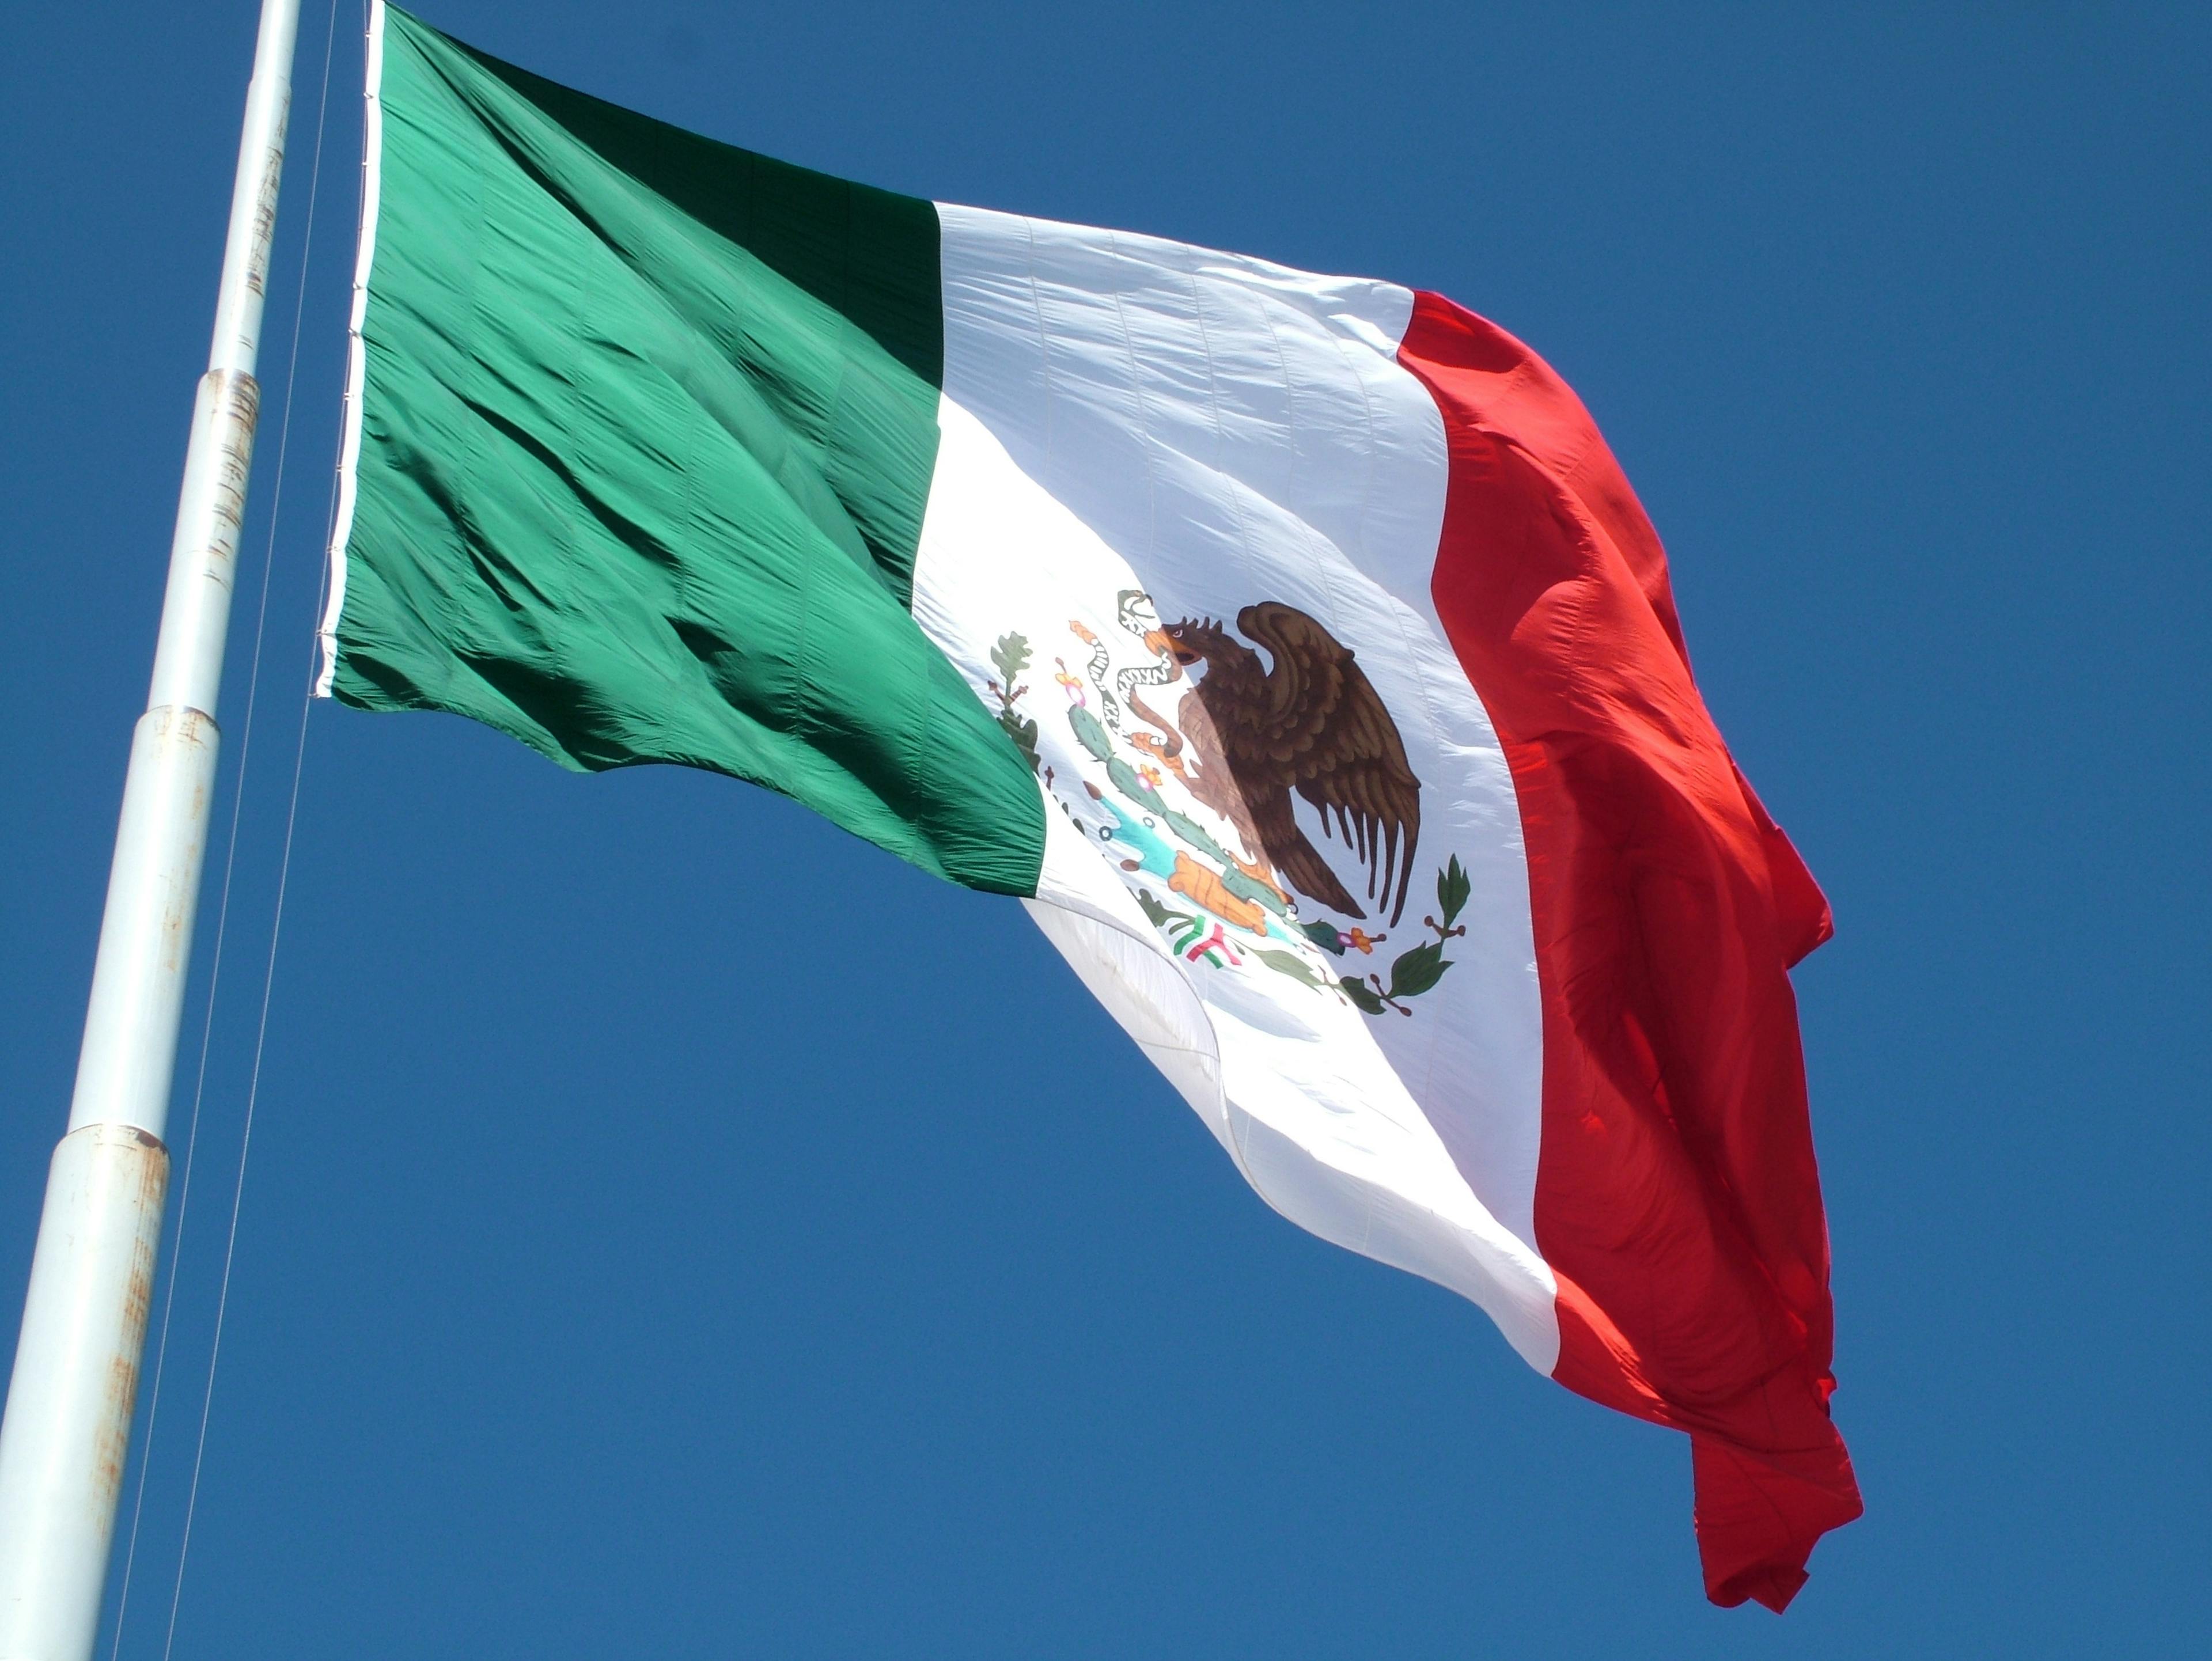 wind-flag-blue-colors-mexico-red-flag-715628-pxhere.com.jpg